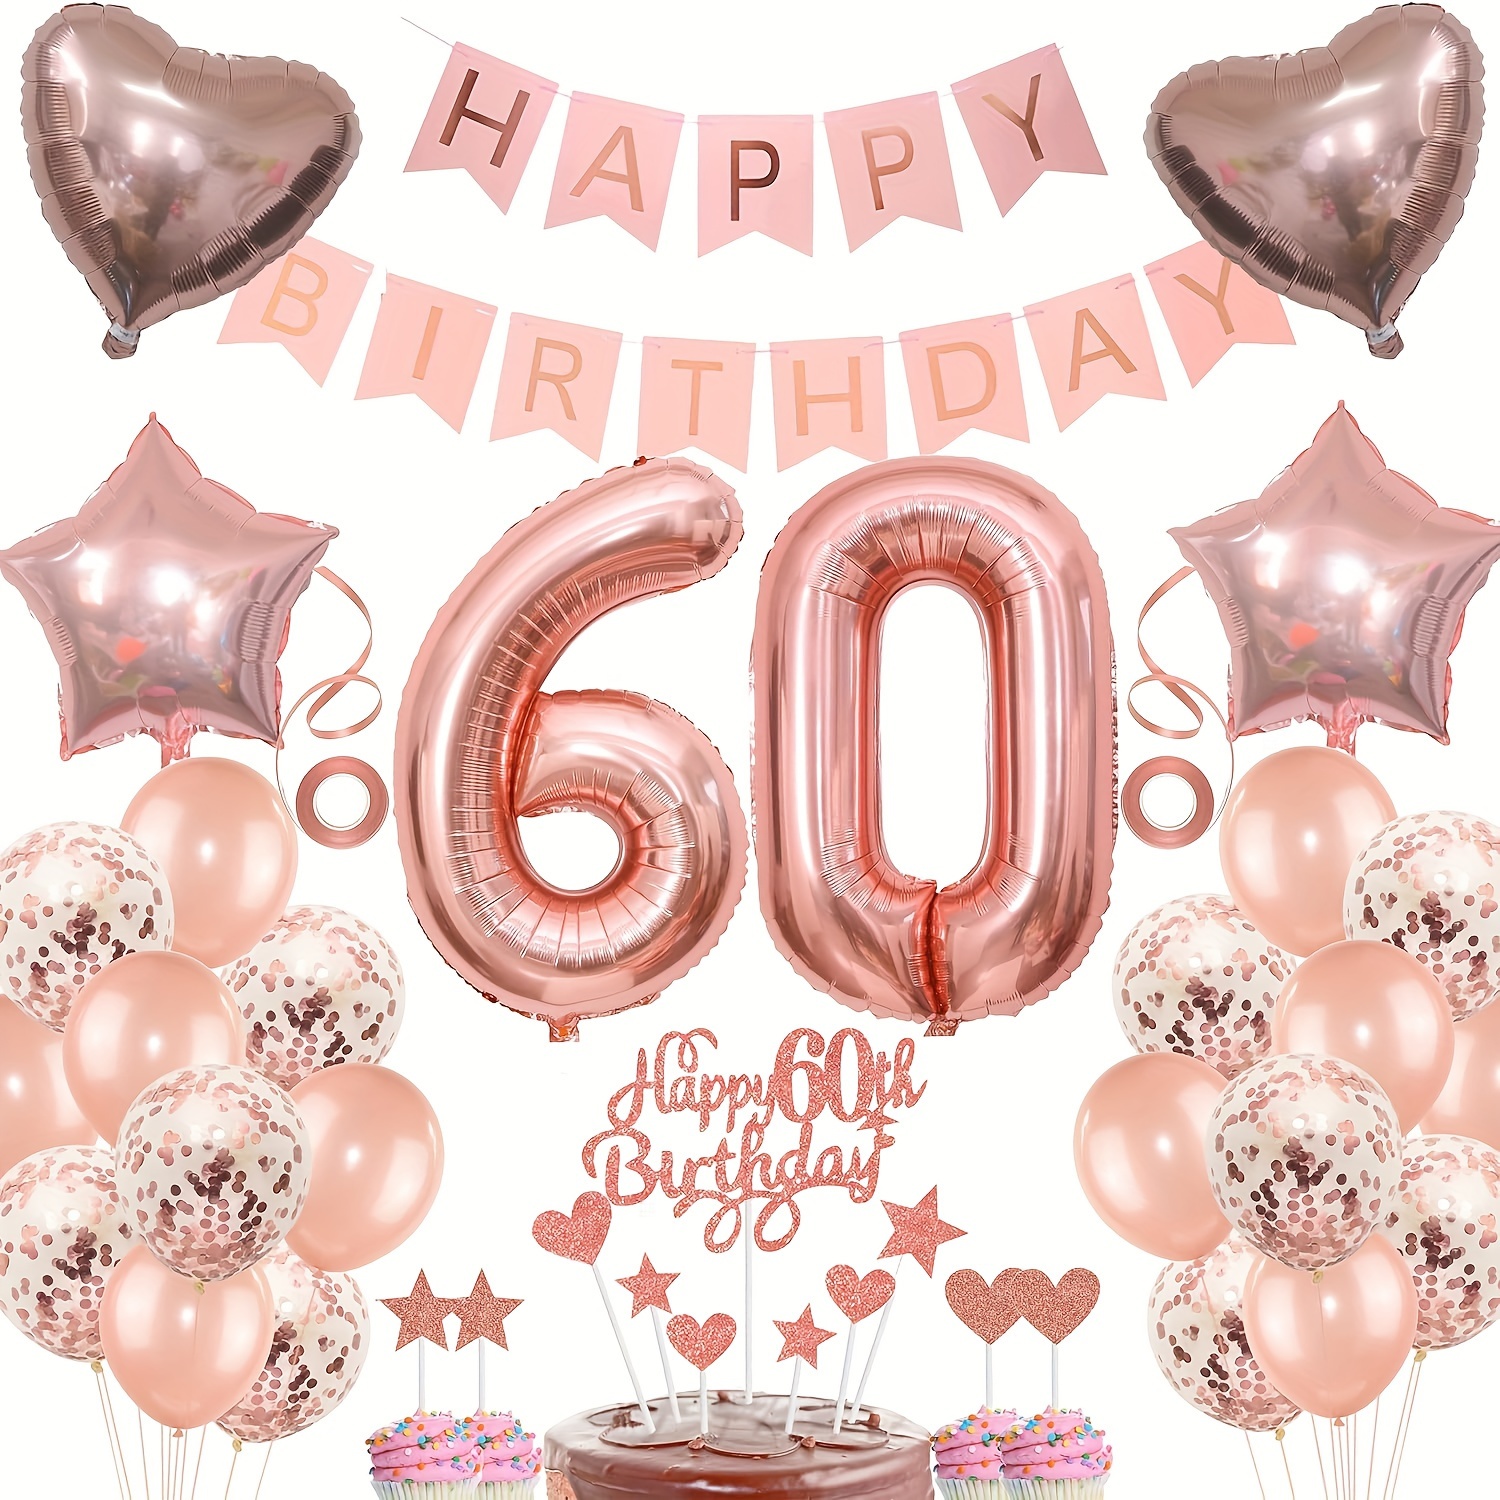 Happy Birthday! JUMBO Deluxe Rose Gold & Pink Foil Balloon Bouquet